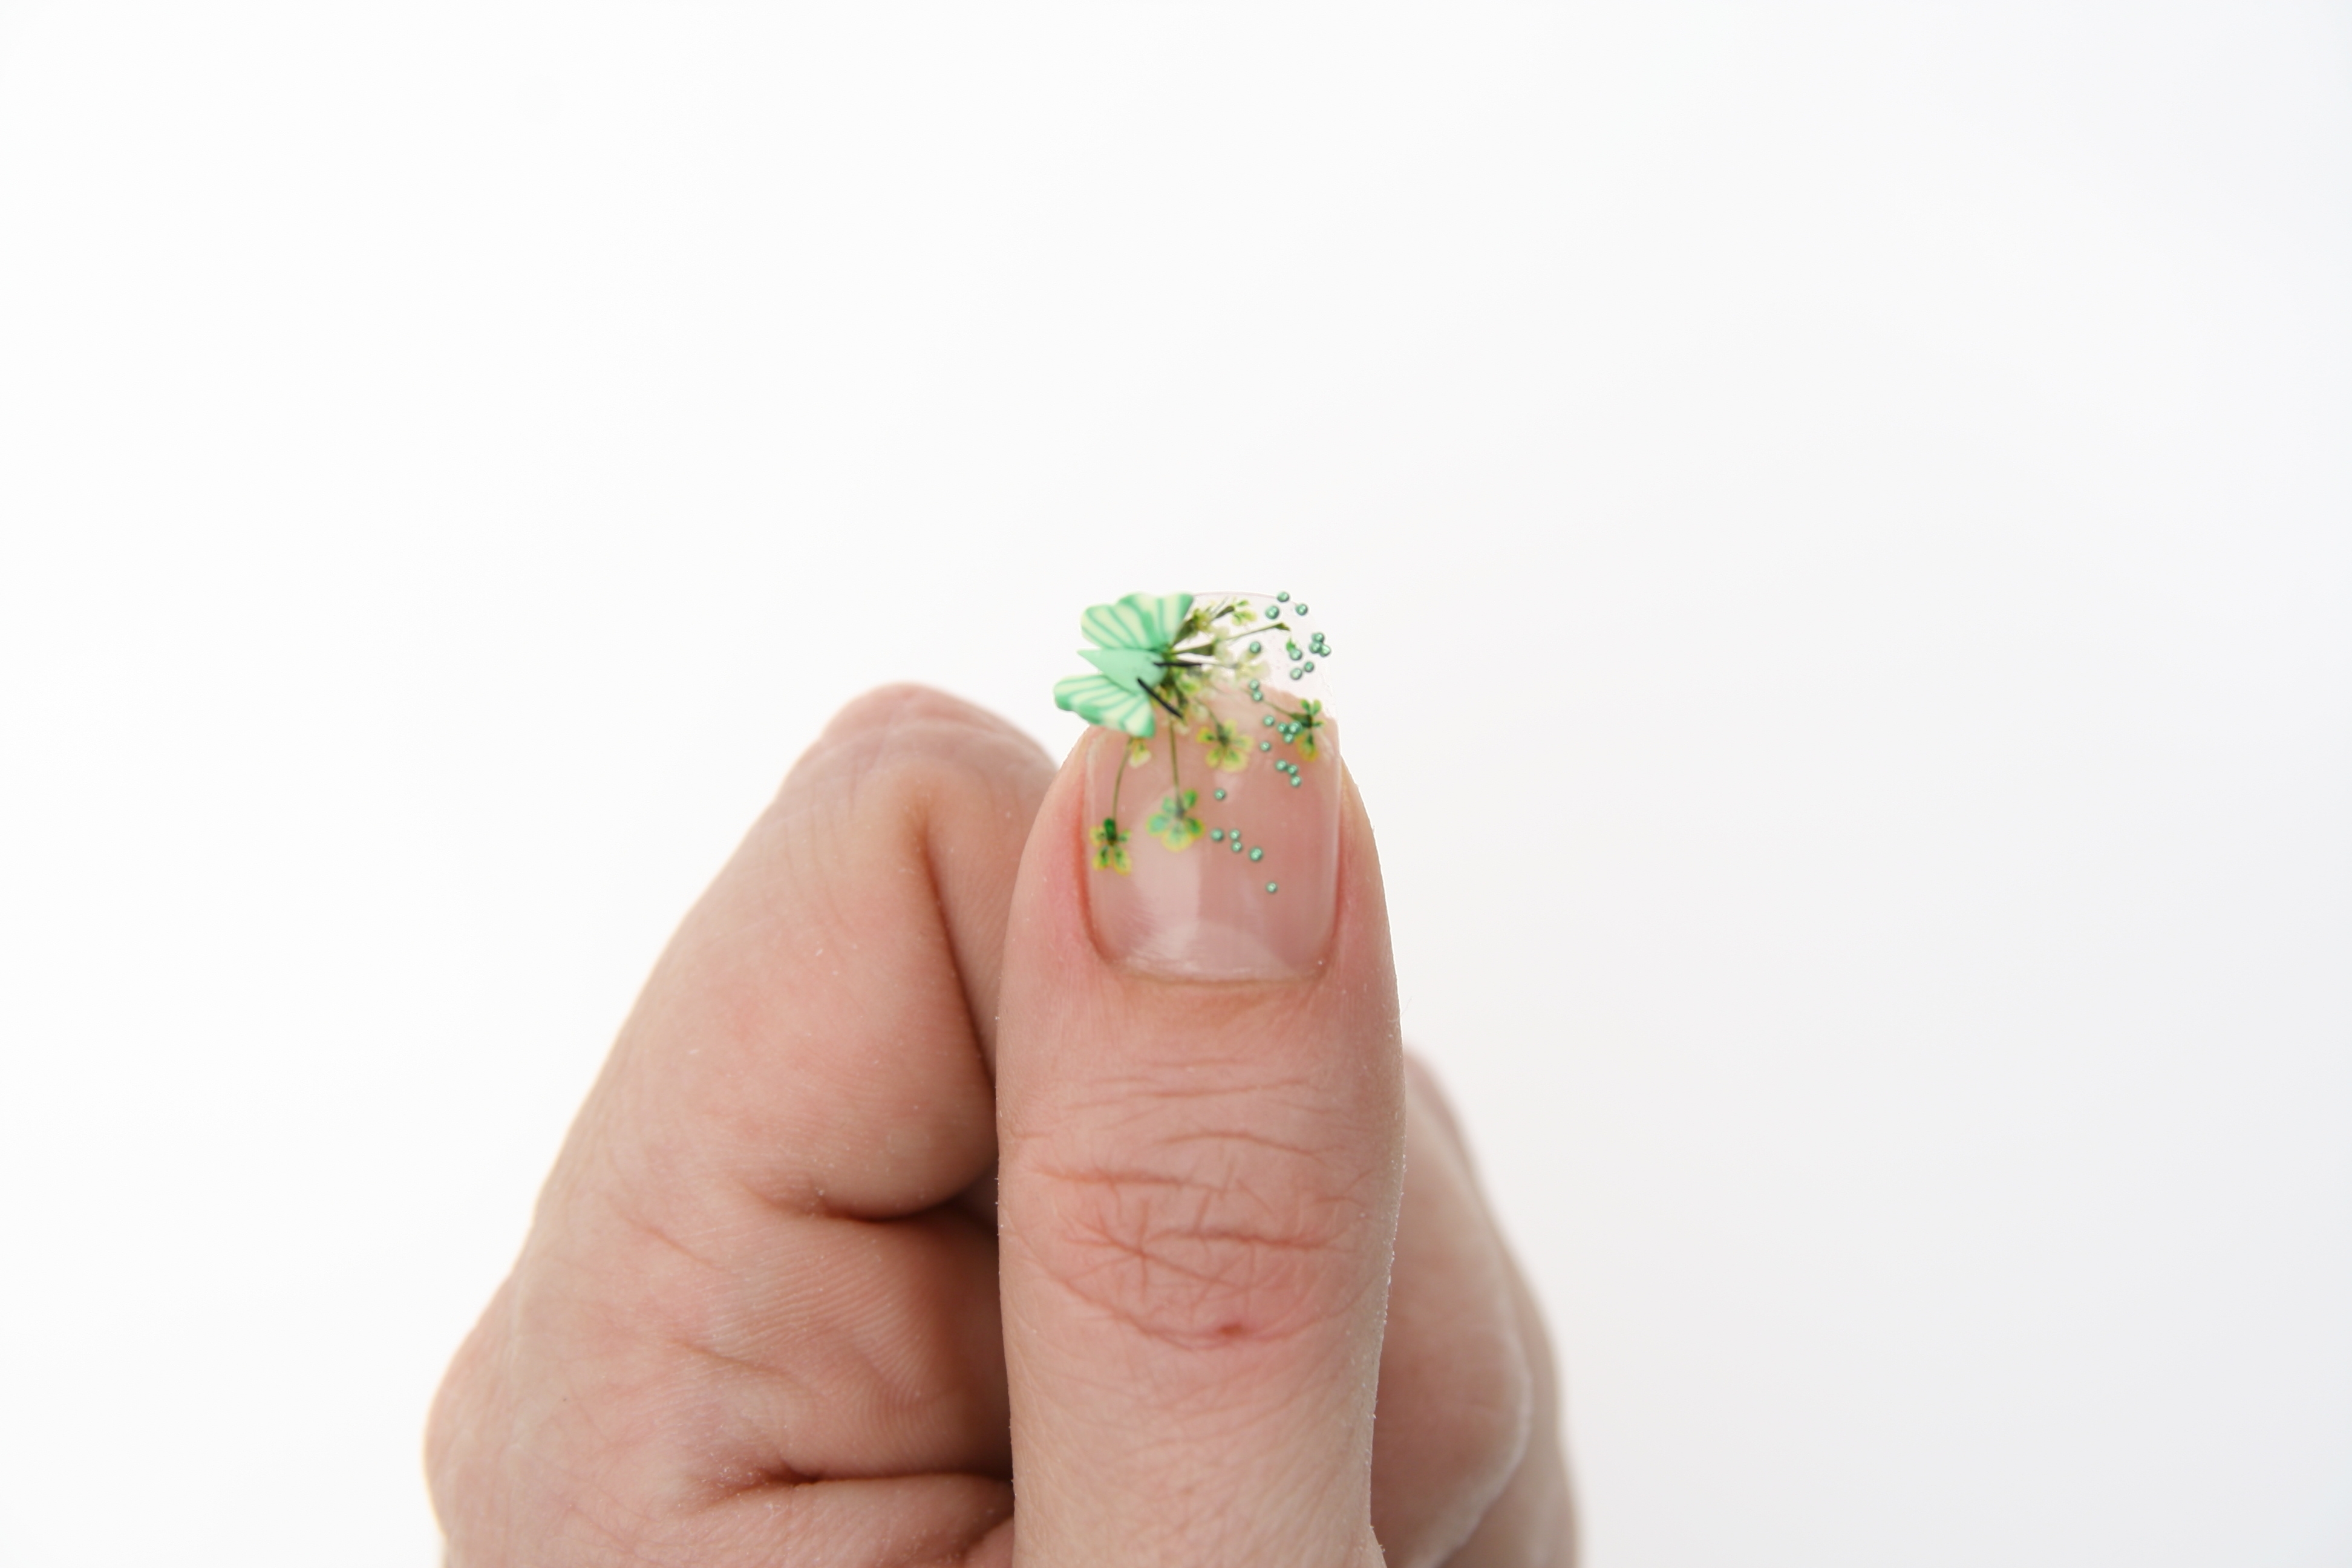 3D motliky na nechty